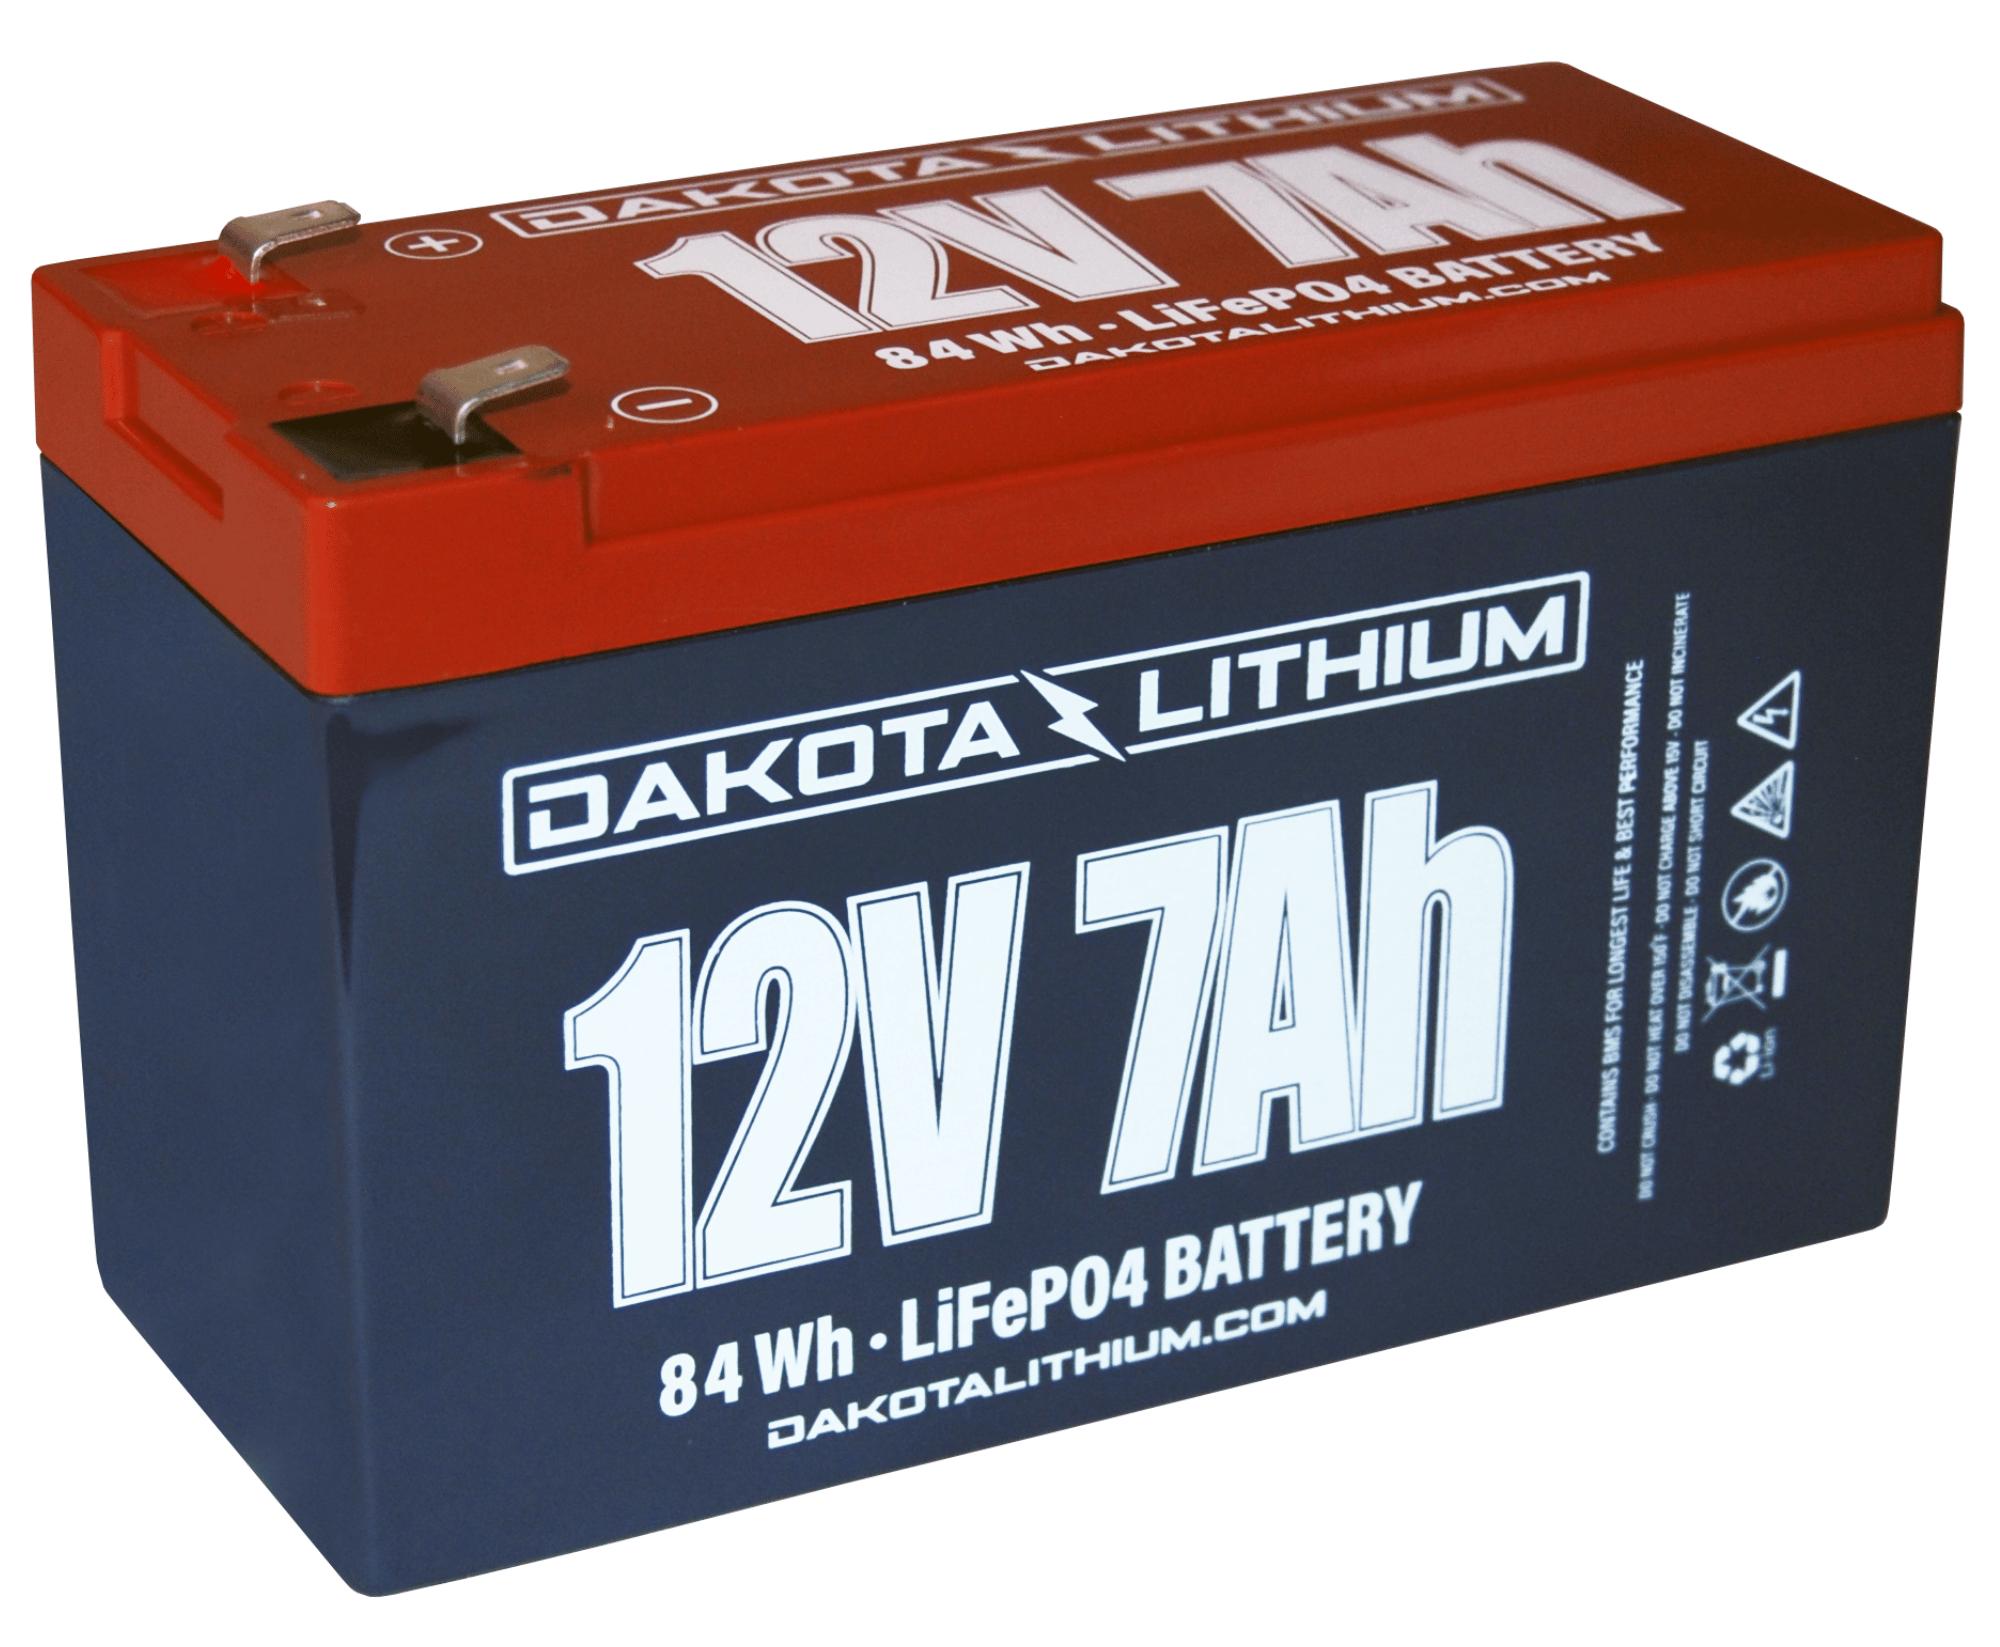 Dakota Lithium | 12V 7Ah Deep Cycle LiFePO4 Battery